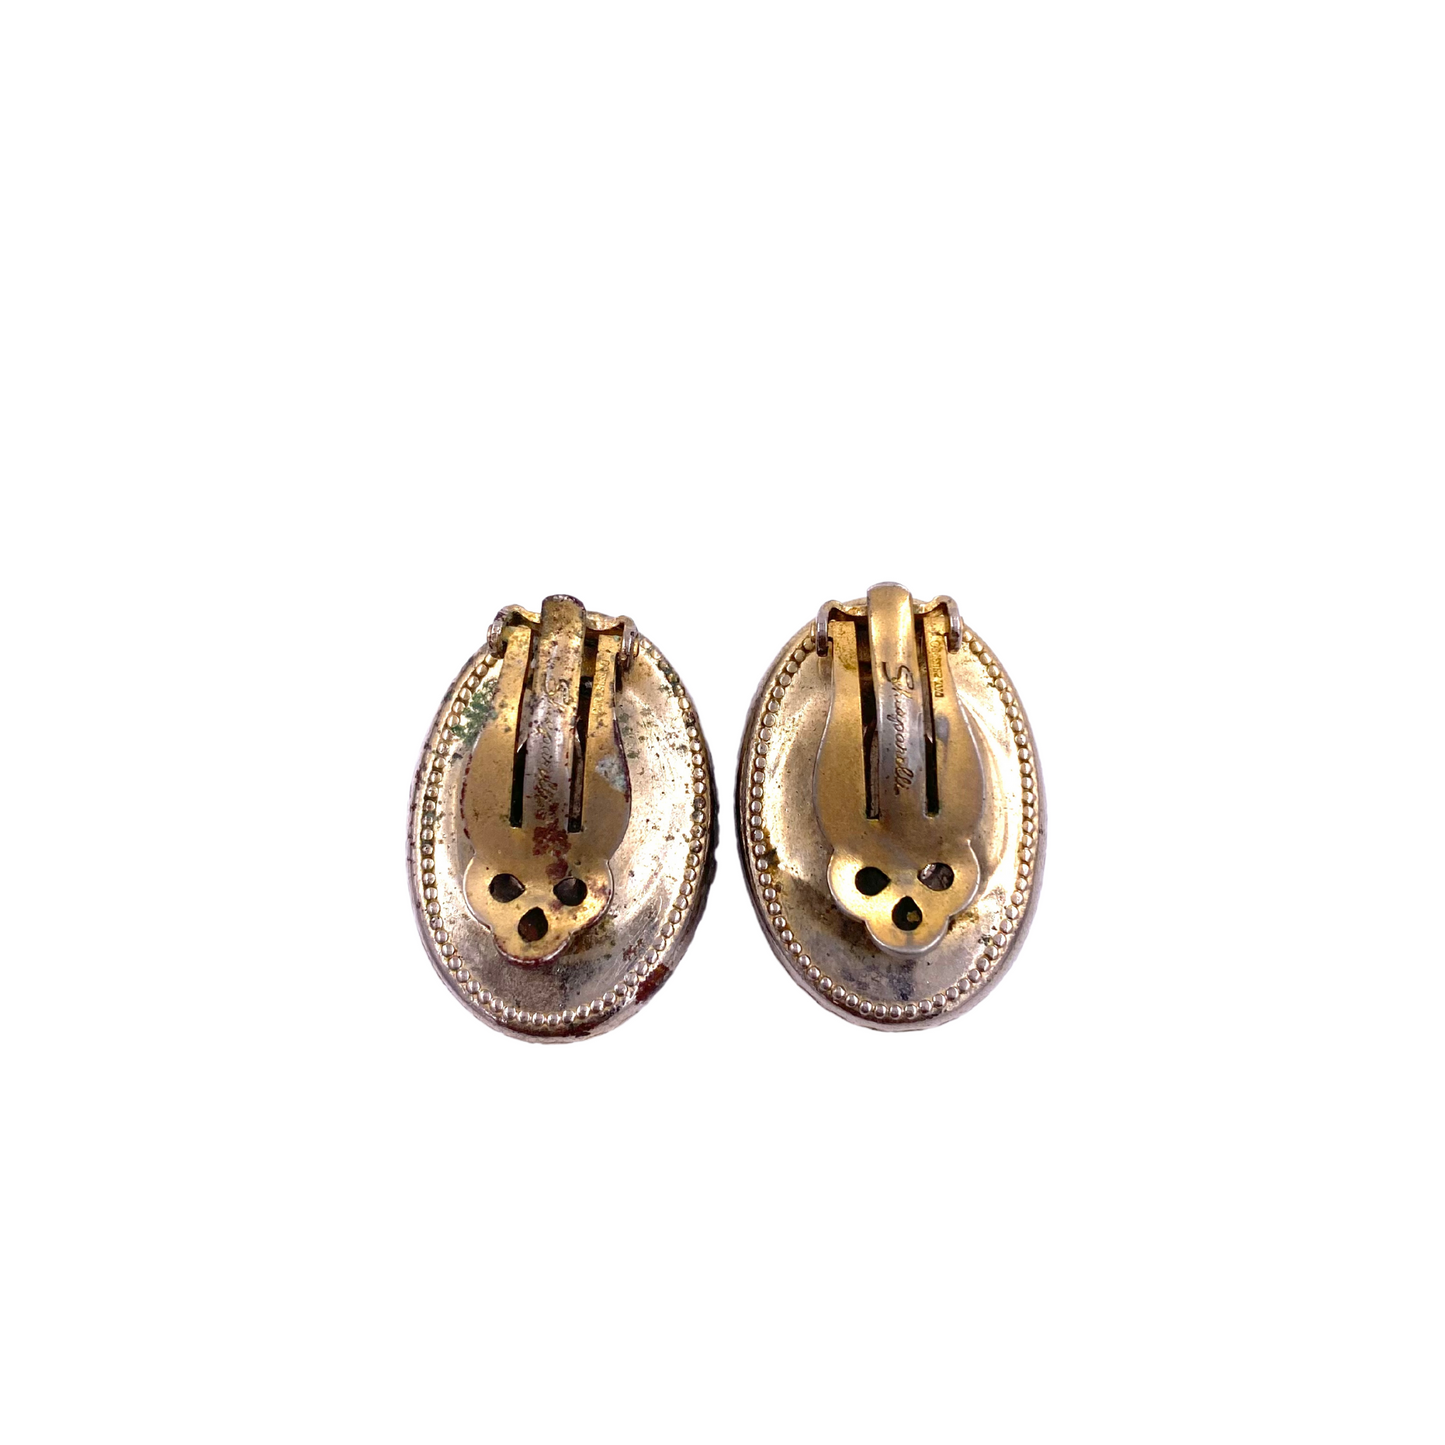 Schiaparelli Watermelon Stone Necklace/earrings set